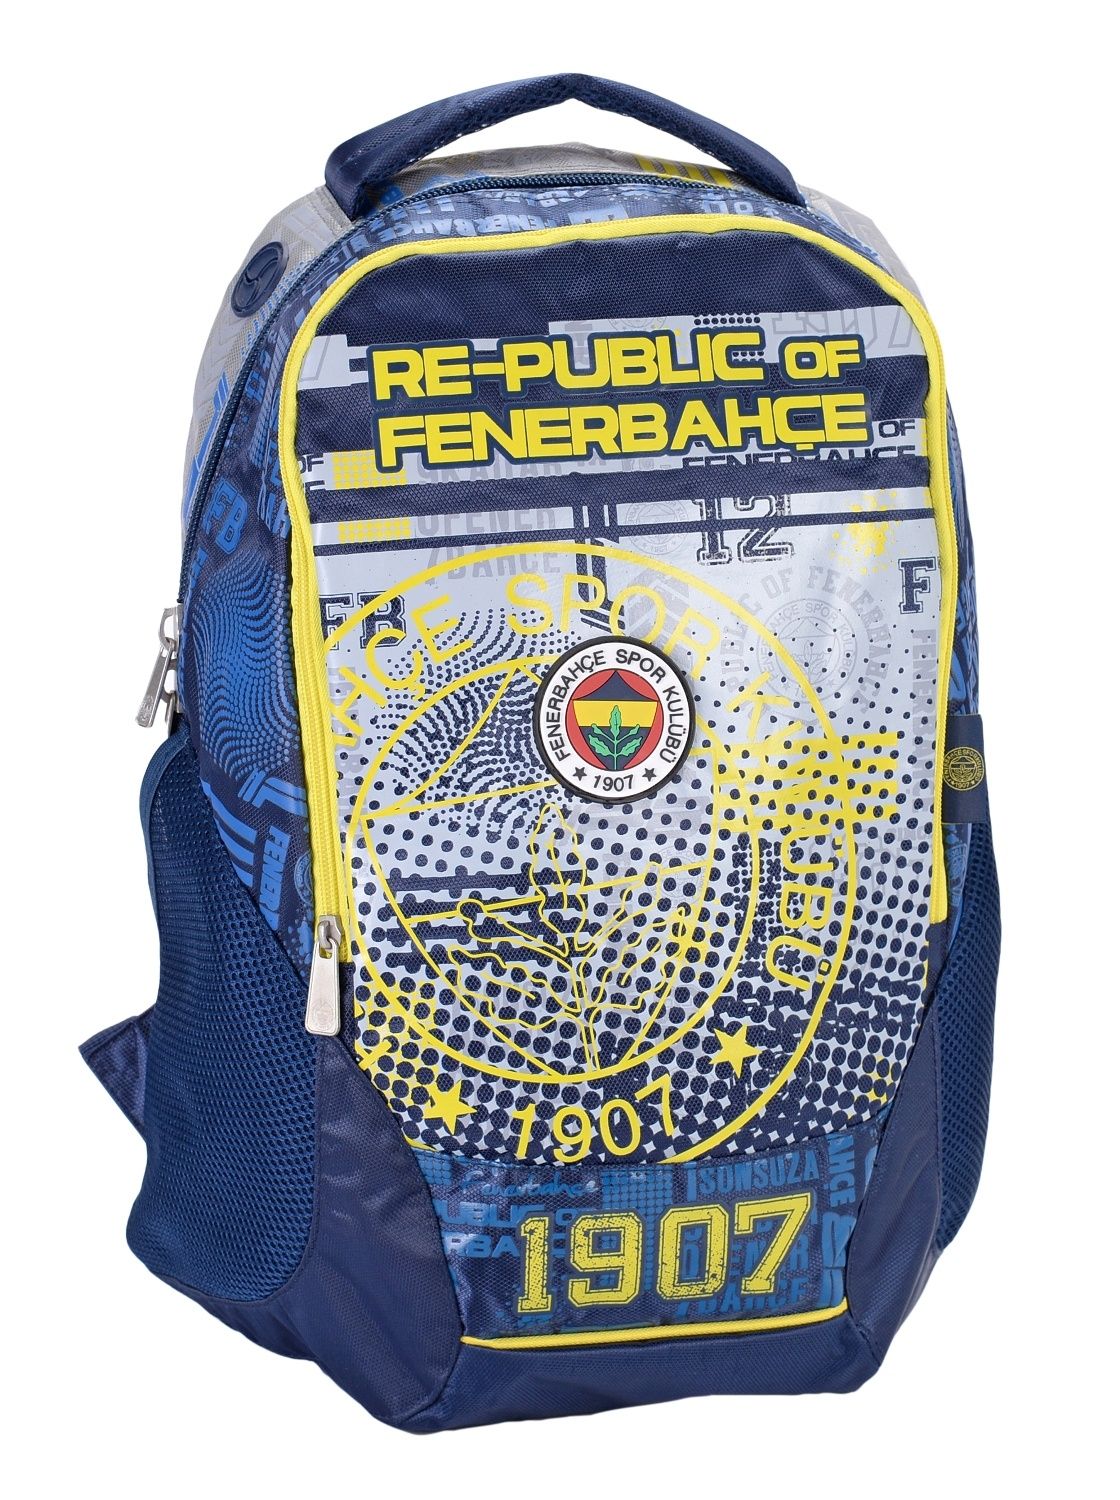 Fenerbahçe Sırt Çantası Re-publıc Of Fenerbahçe